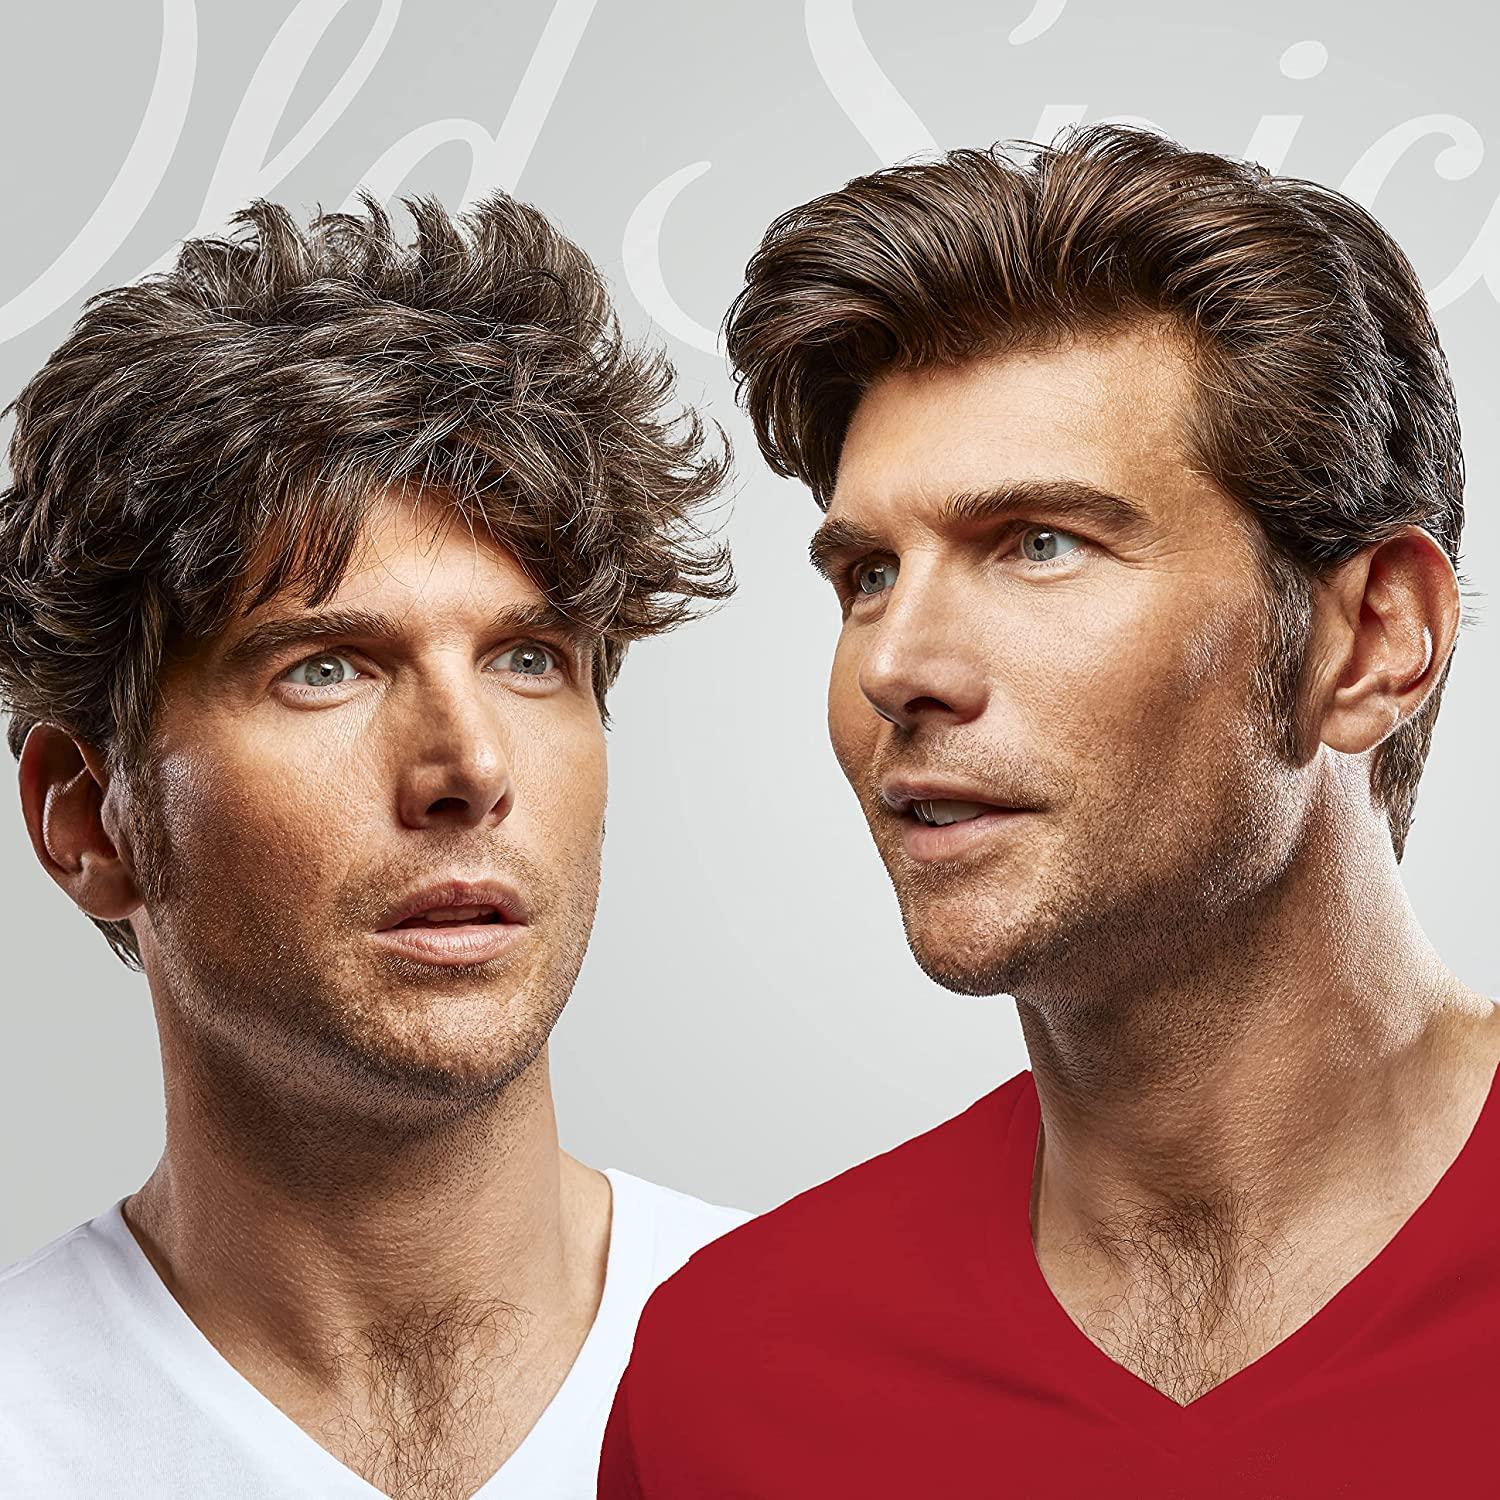 Hair Color for Men - Everything You Need to Know | Cabelo grande masculino,  Cabelo masculino, Corte de cabelo masculino